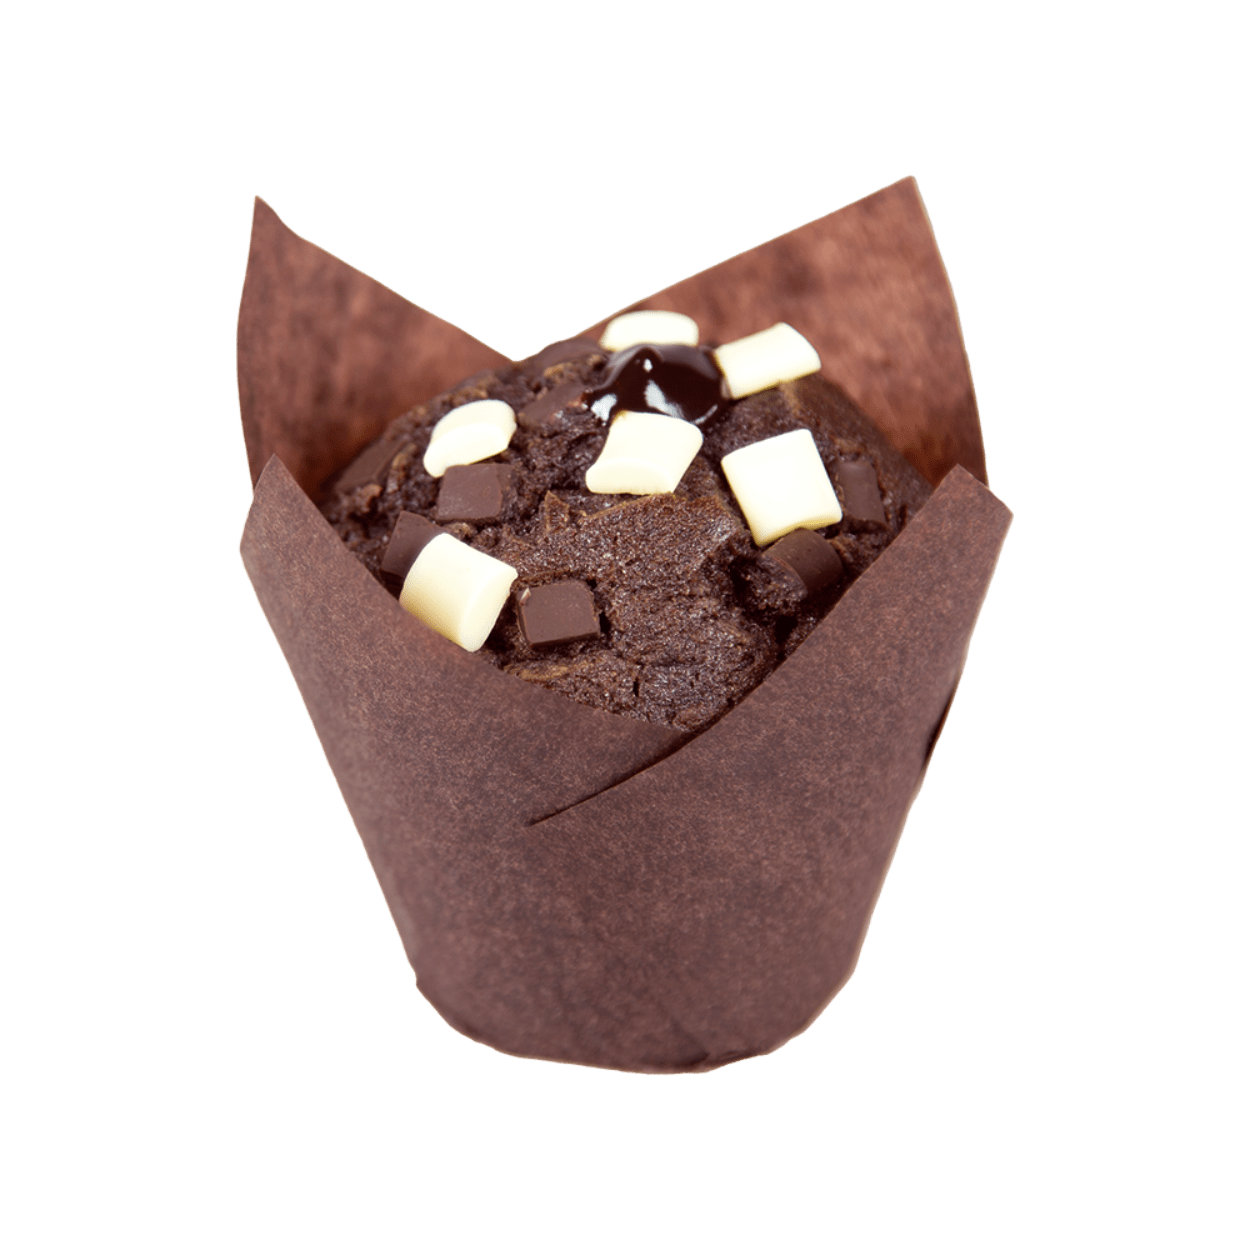 Promo Chocolats merci chez ALDI